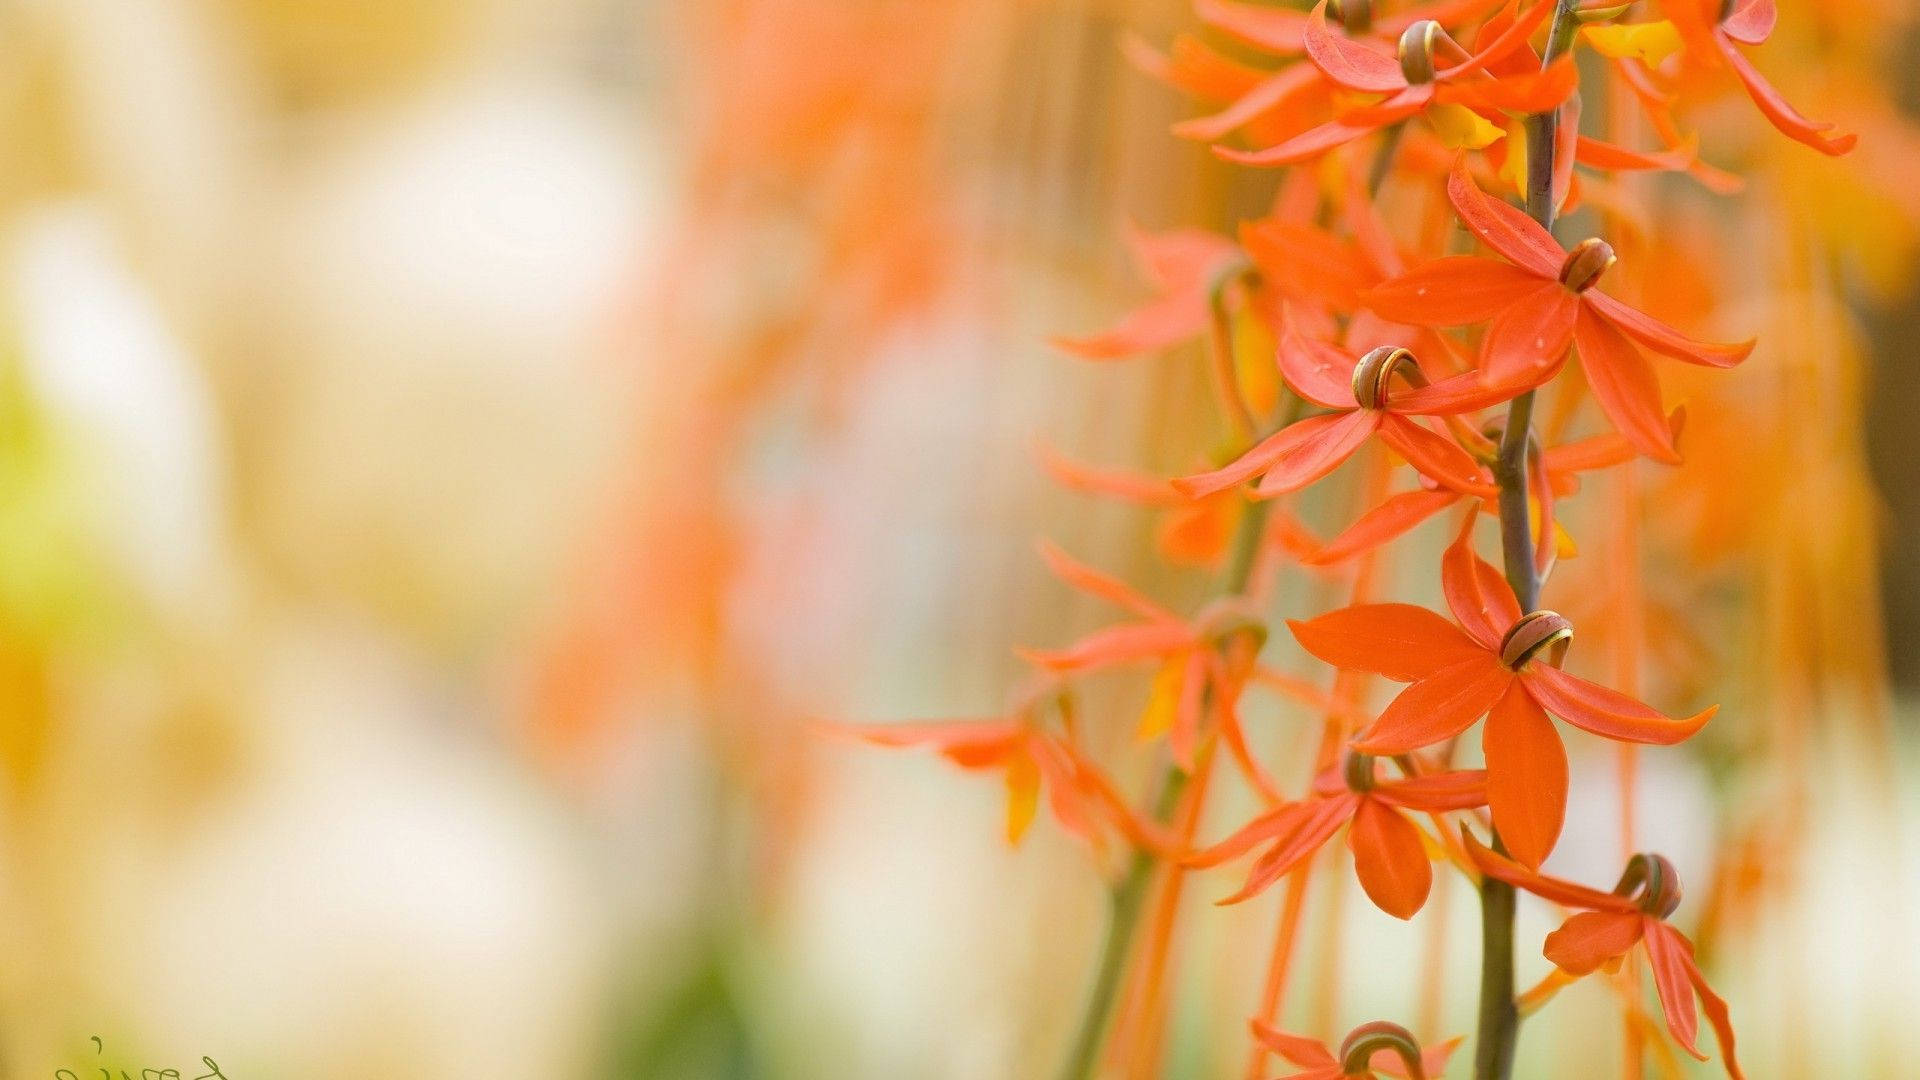 Macro Flower With Tangerine Orange Petals Background